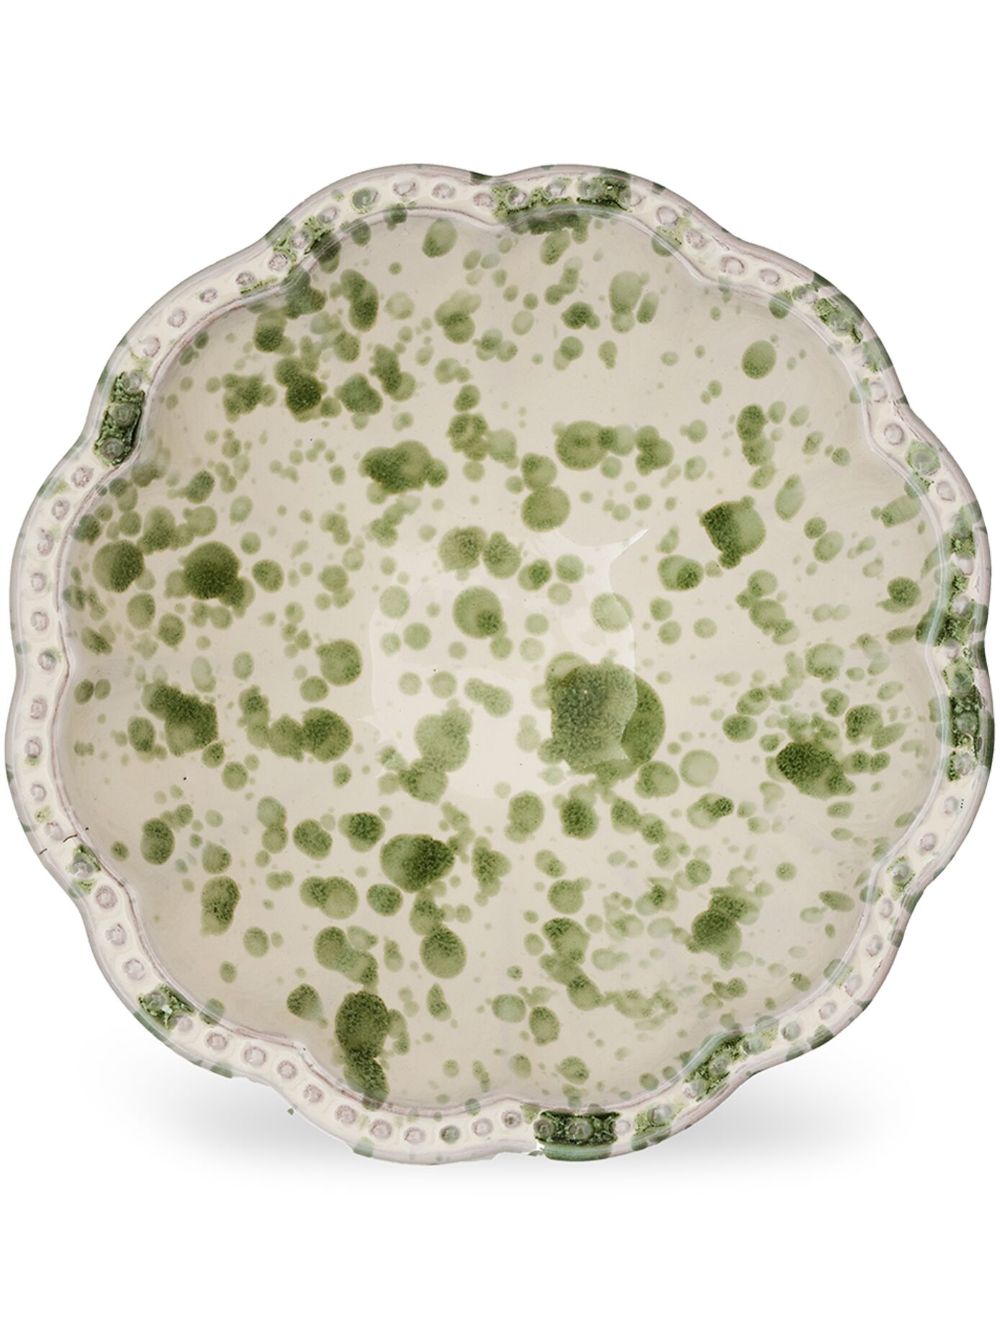 Cabana Speckled ceramic fruit plate (21cm) - Green